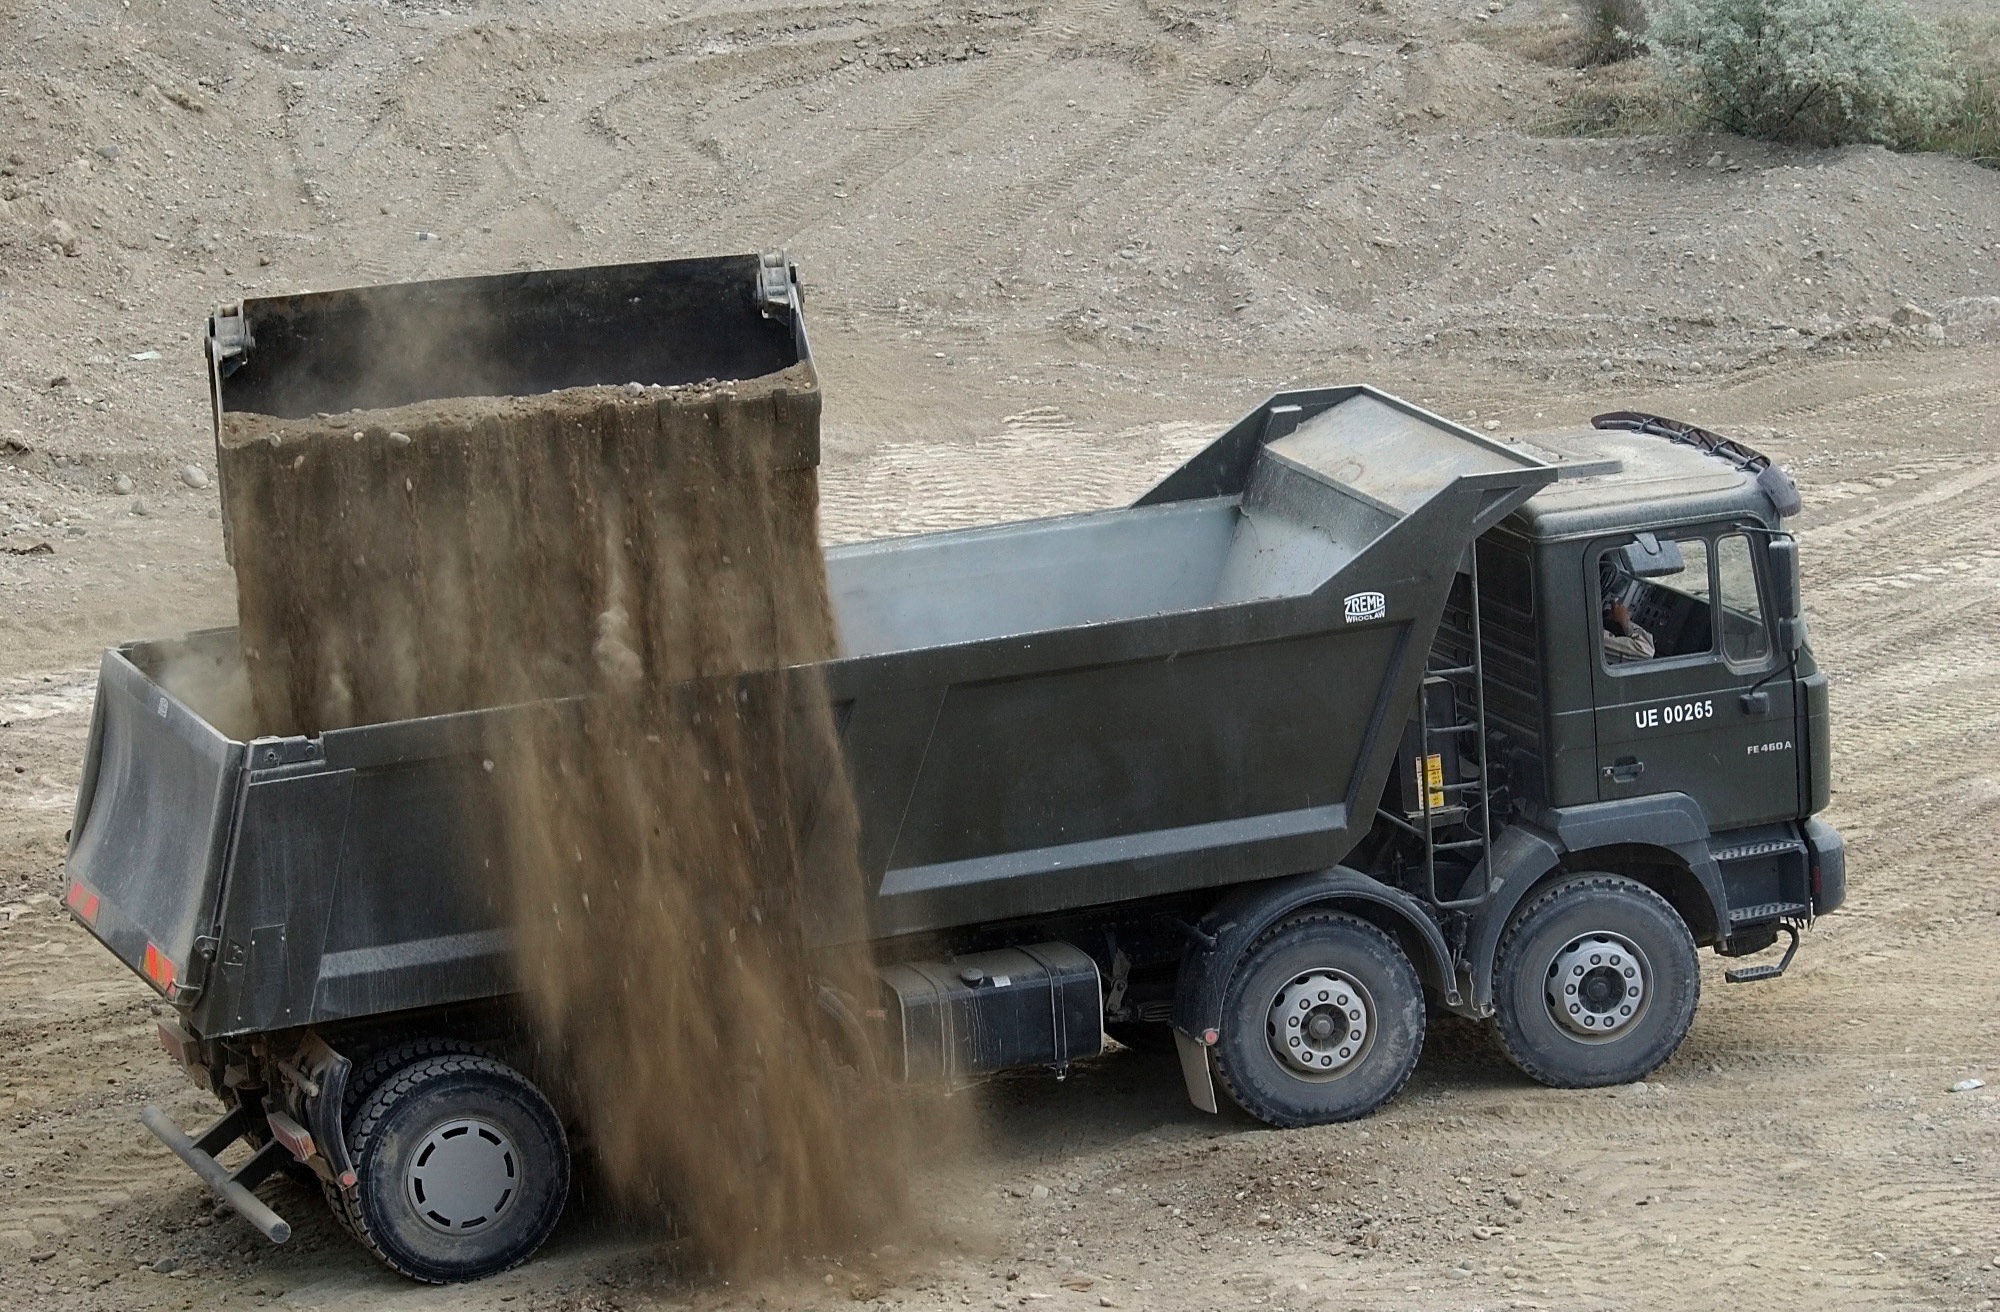 MAN FE460A truck in Afghanistan